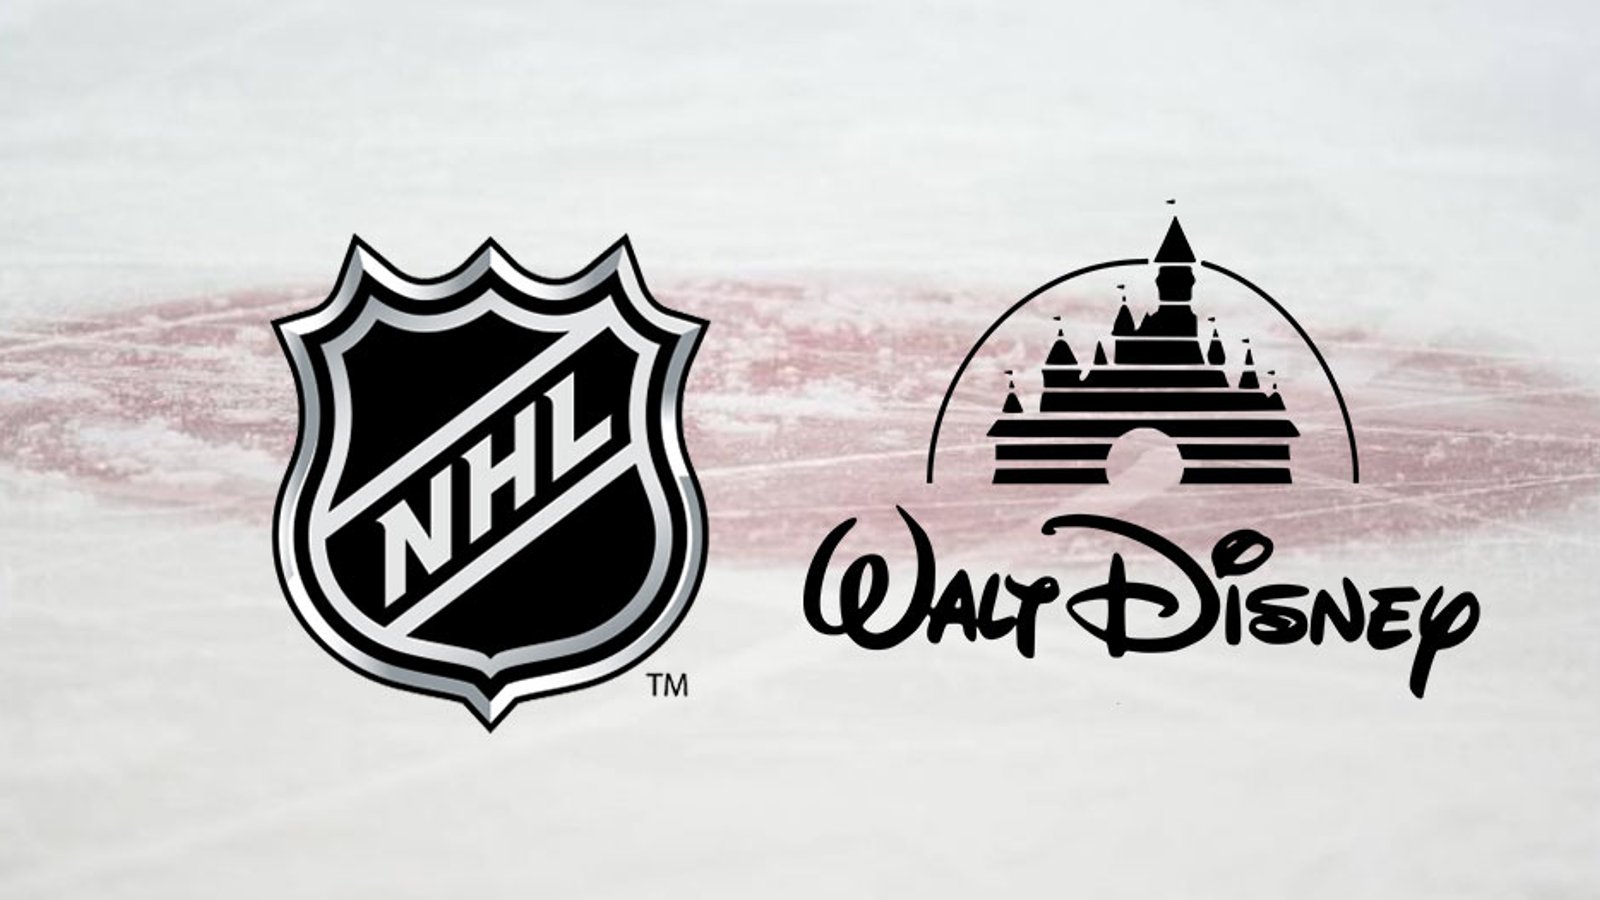 NHL and Disney announce partnership for 2019-20 season